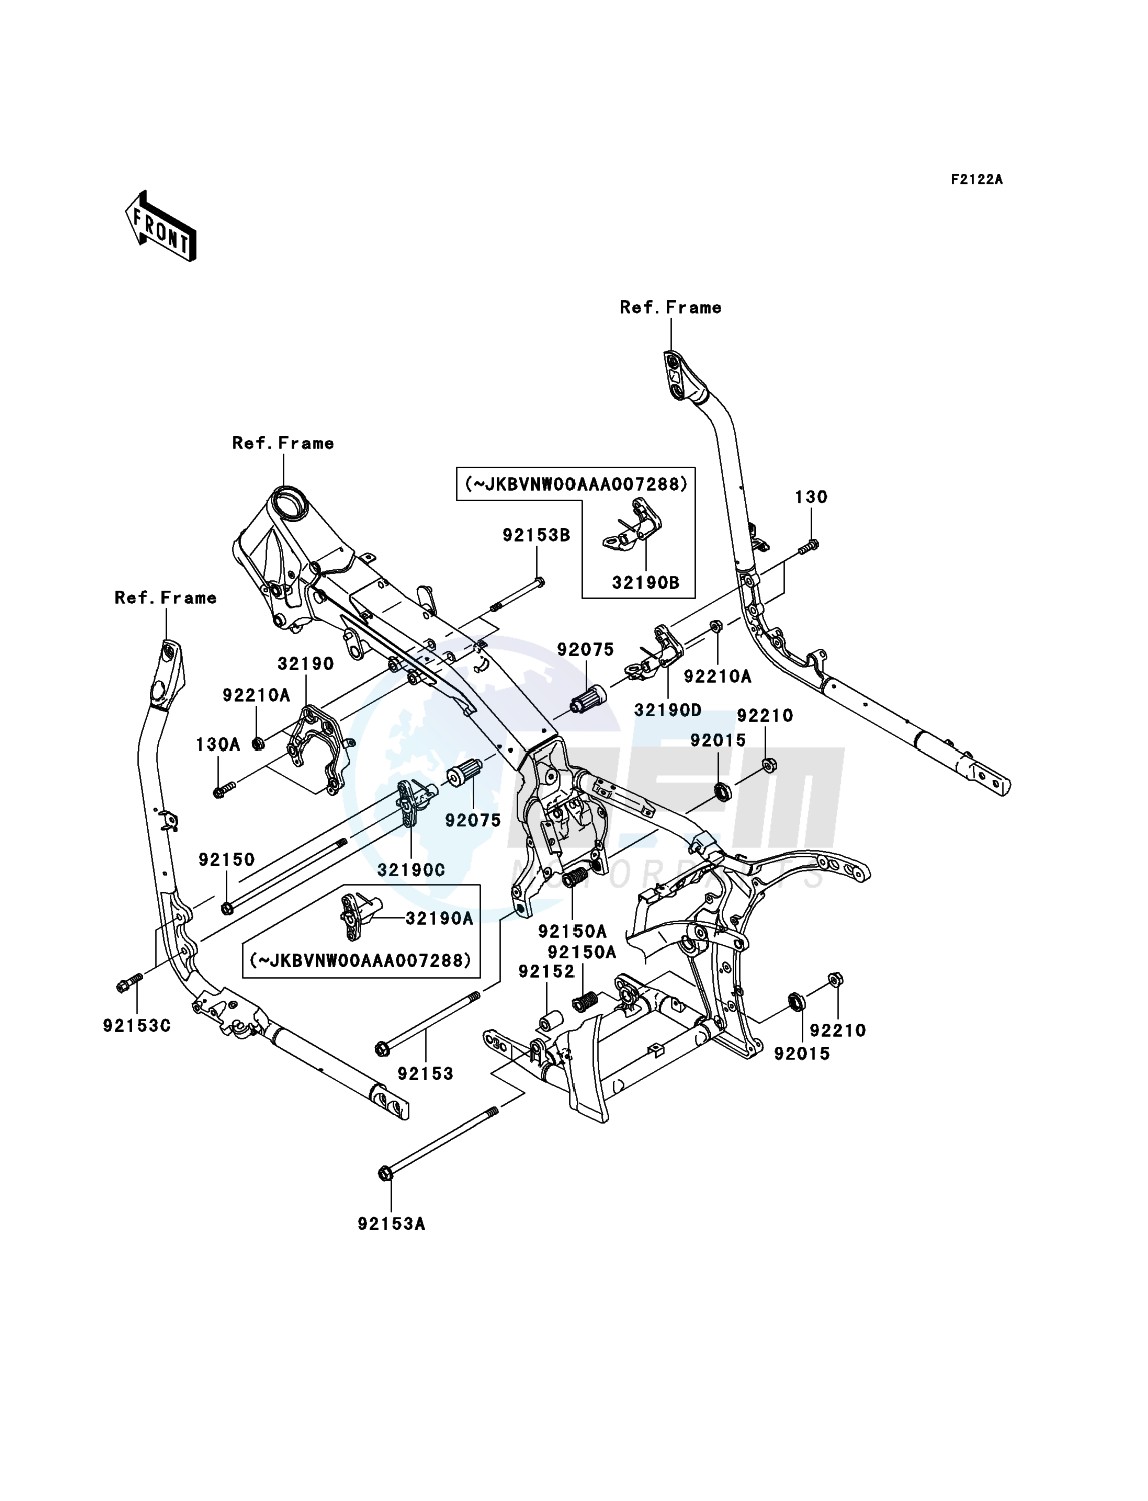 Engine Mount blueprint